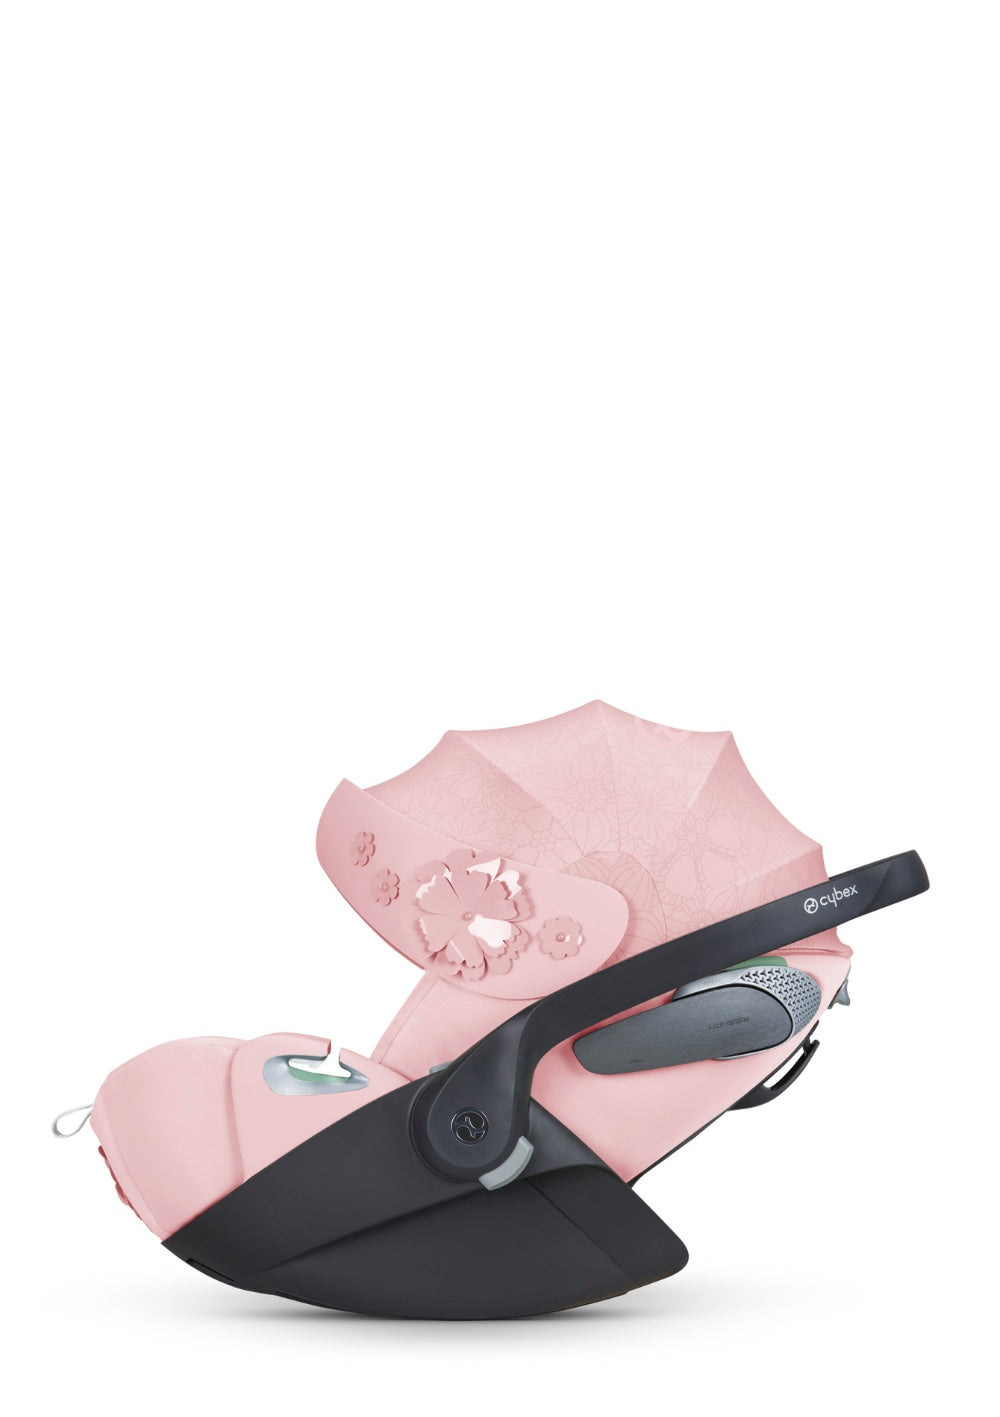 Cybex Cloud T i-size Fashion Edition 'Simply Flowers' pale blush